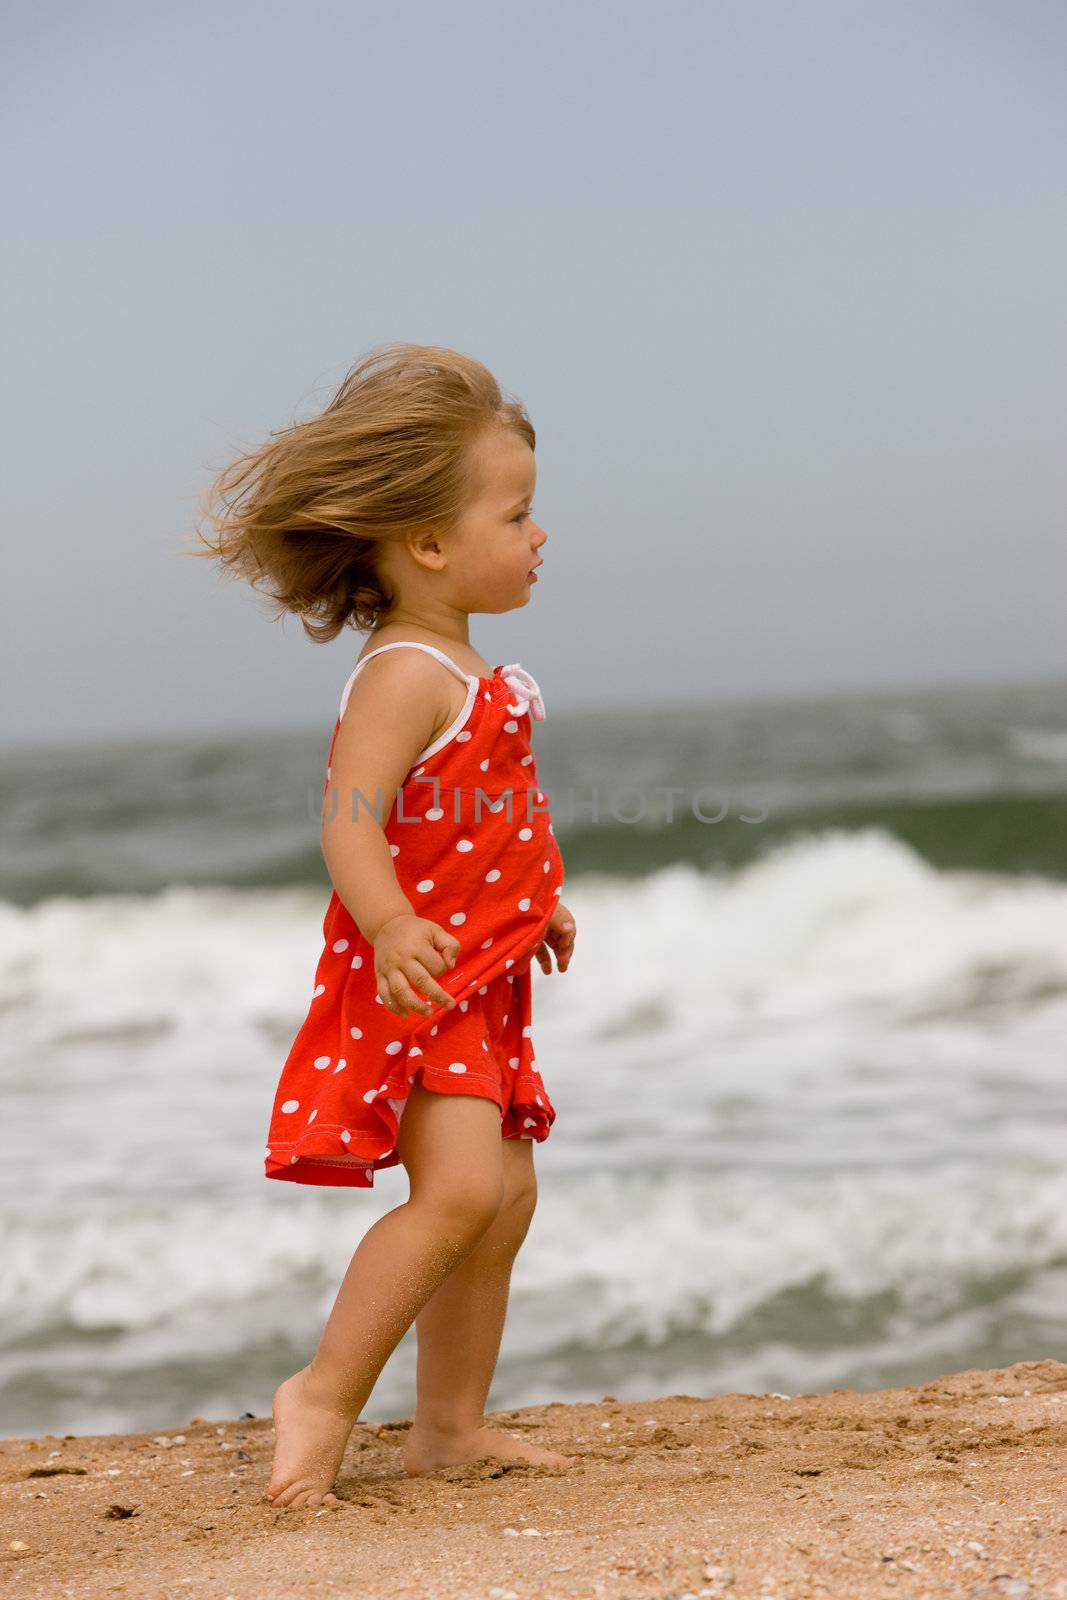 people series: little girl on sea beach in red dress